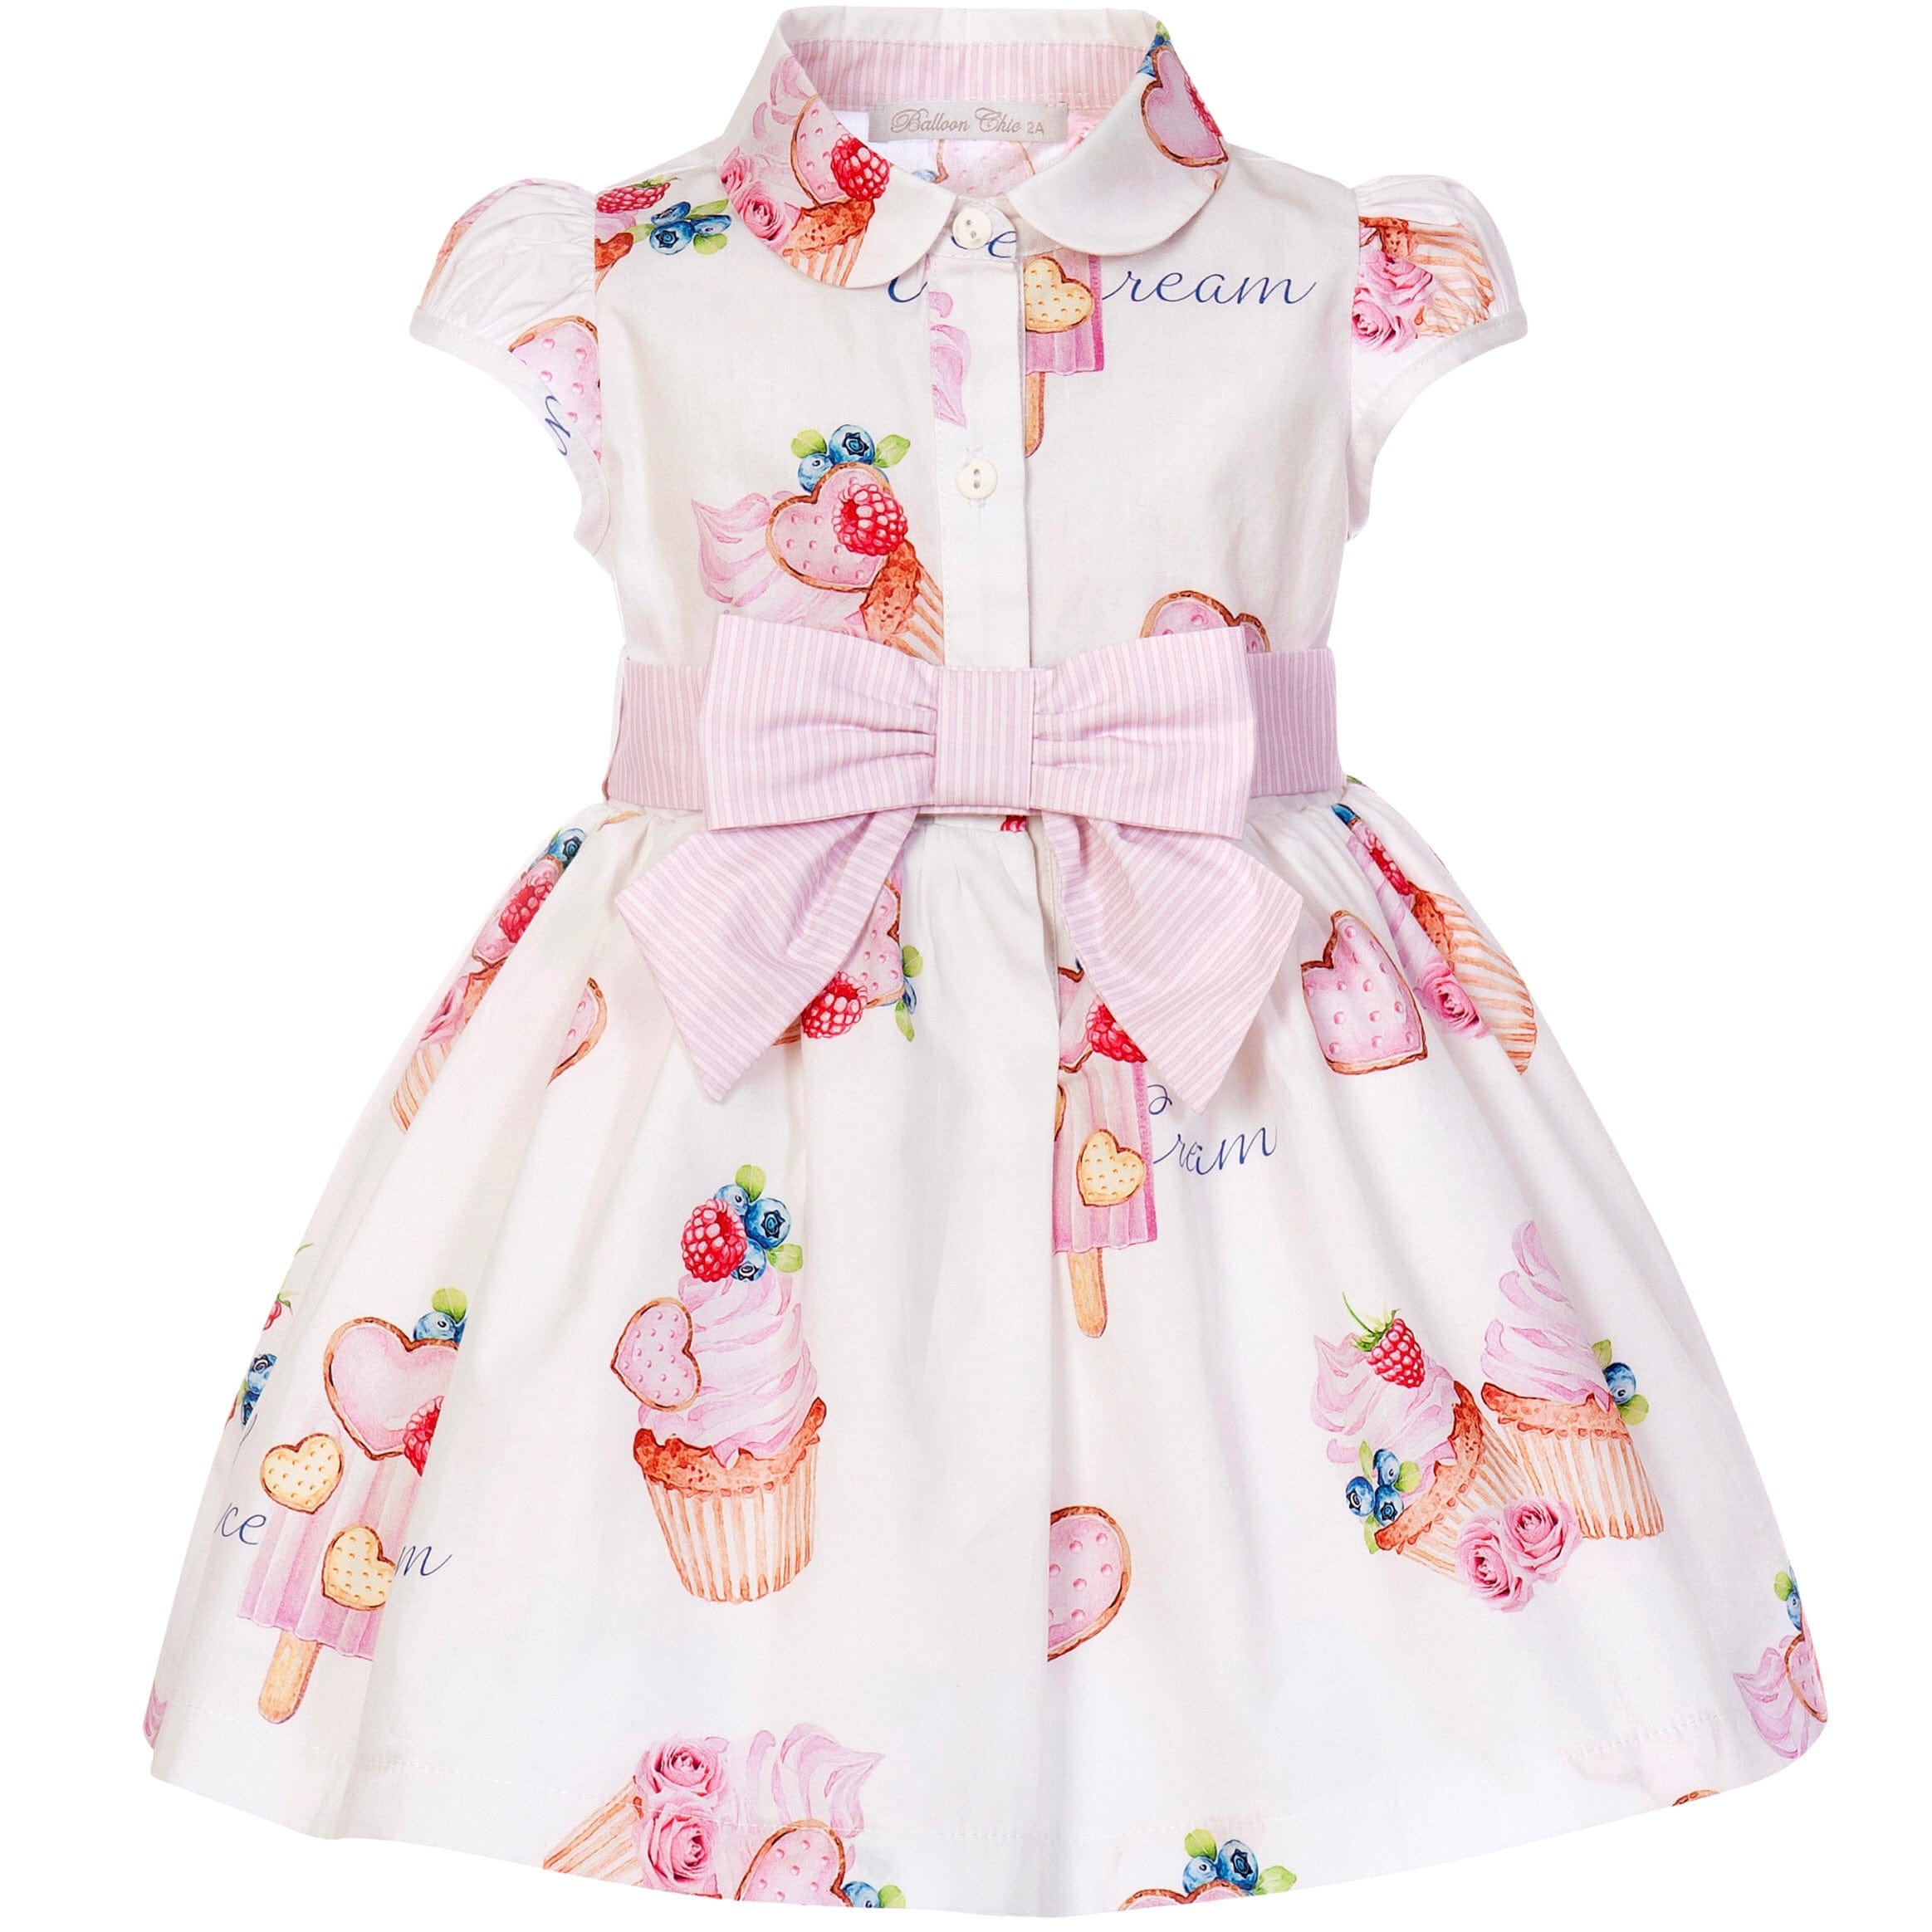 BALLOON CHIC - Cupcake Shirt Dress - Pink